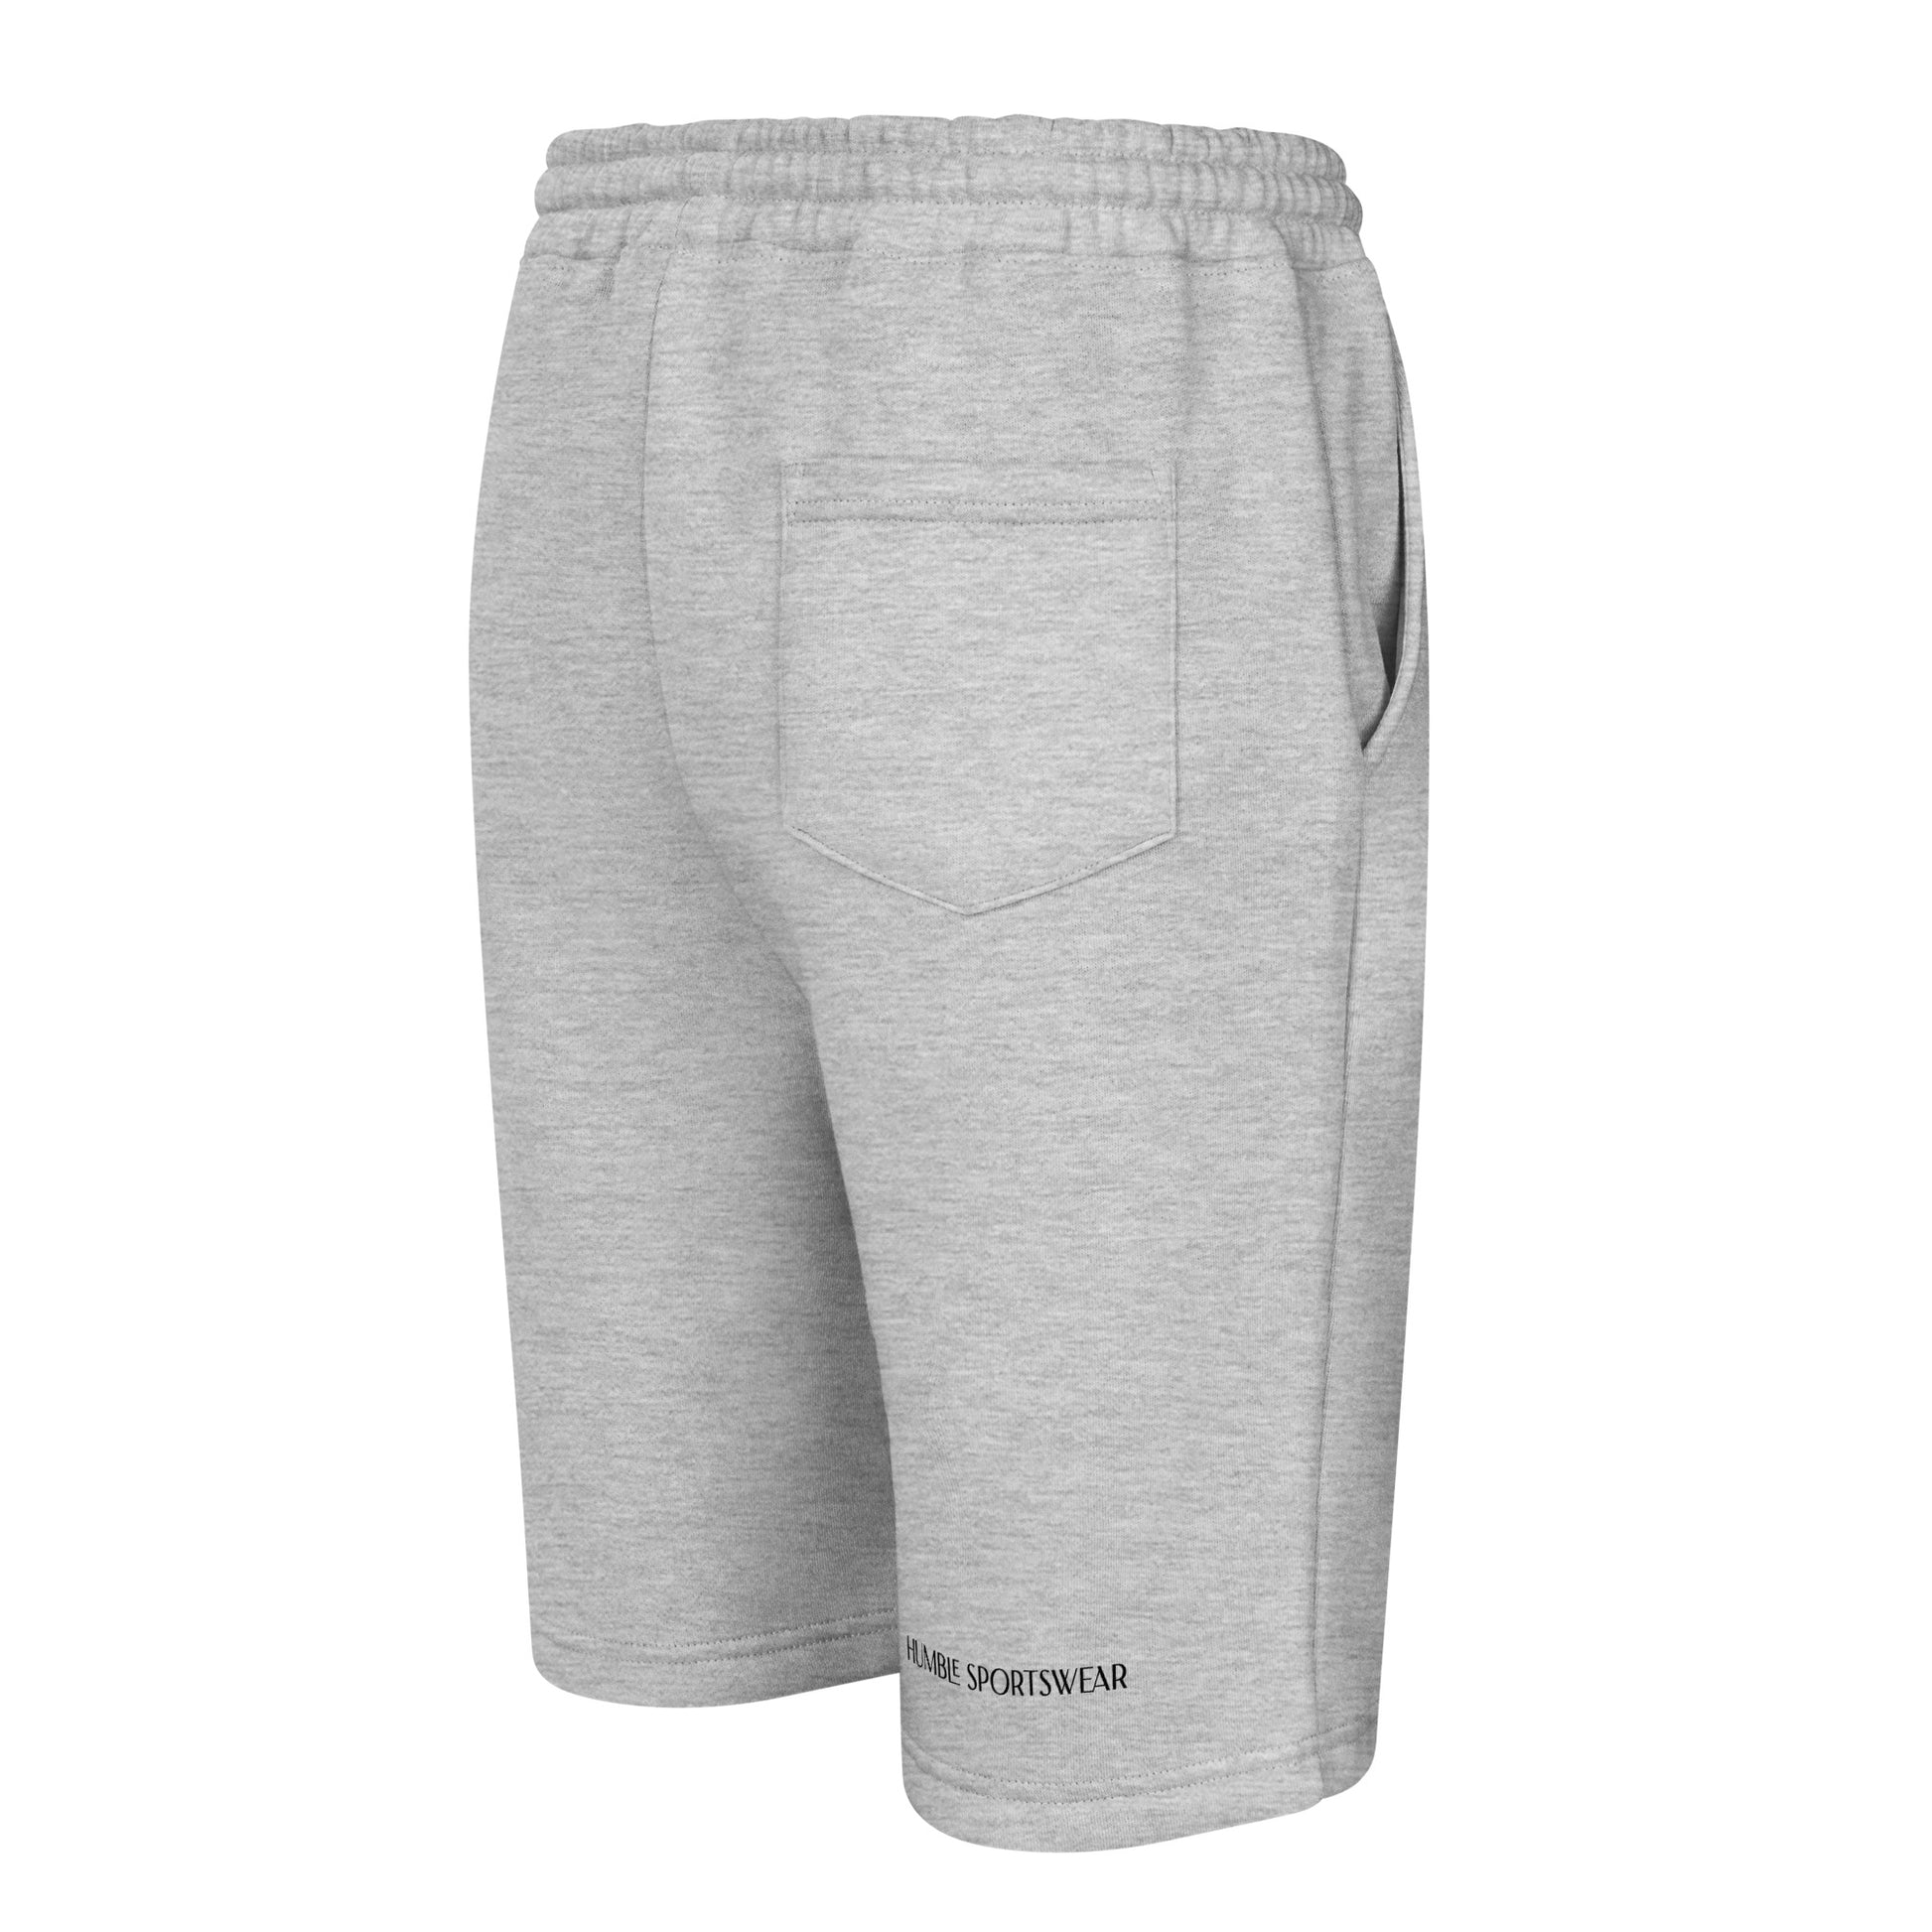 Humble Sportswear, men's fleece shorts for activewear and loungewear